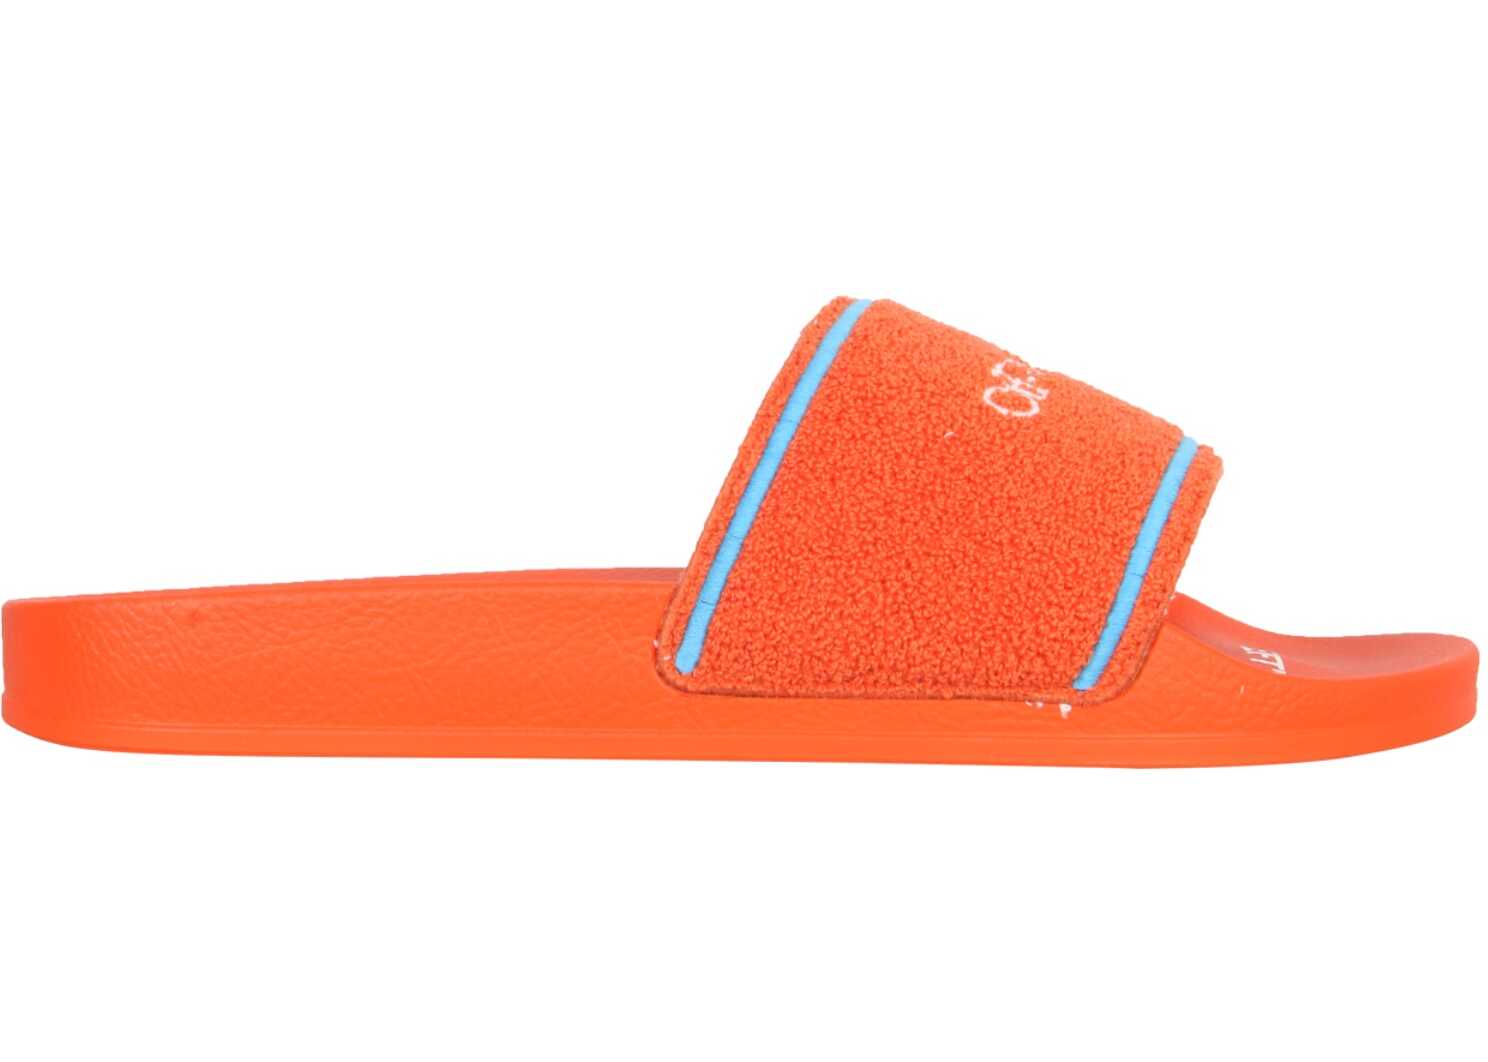 Off-White Slide Sandals OMIC001_F21MAT0012001 ORANGE